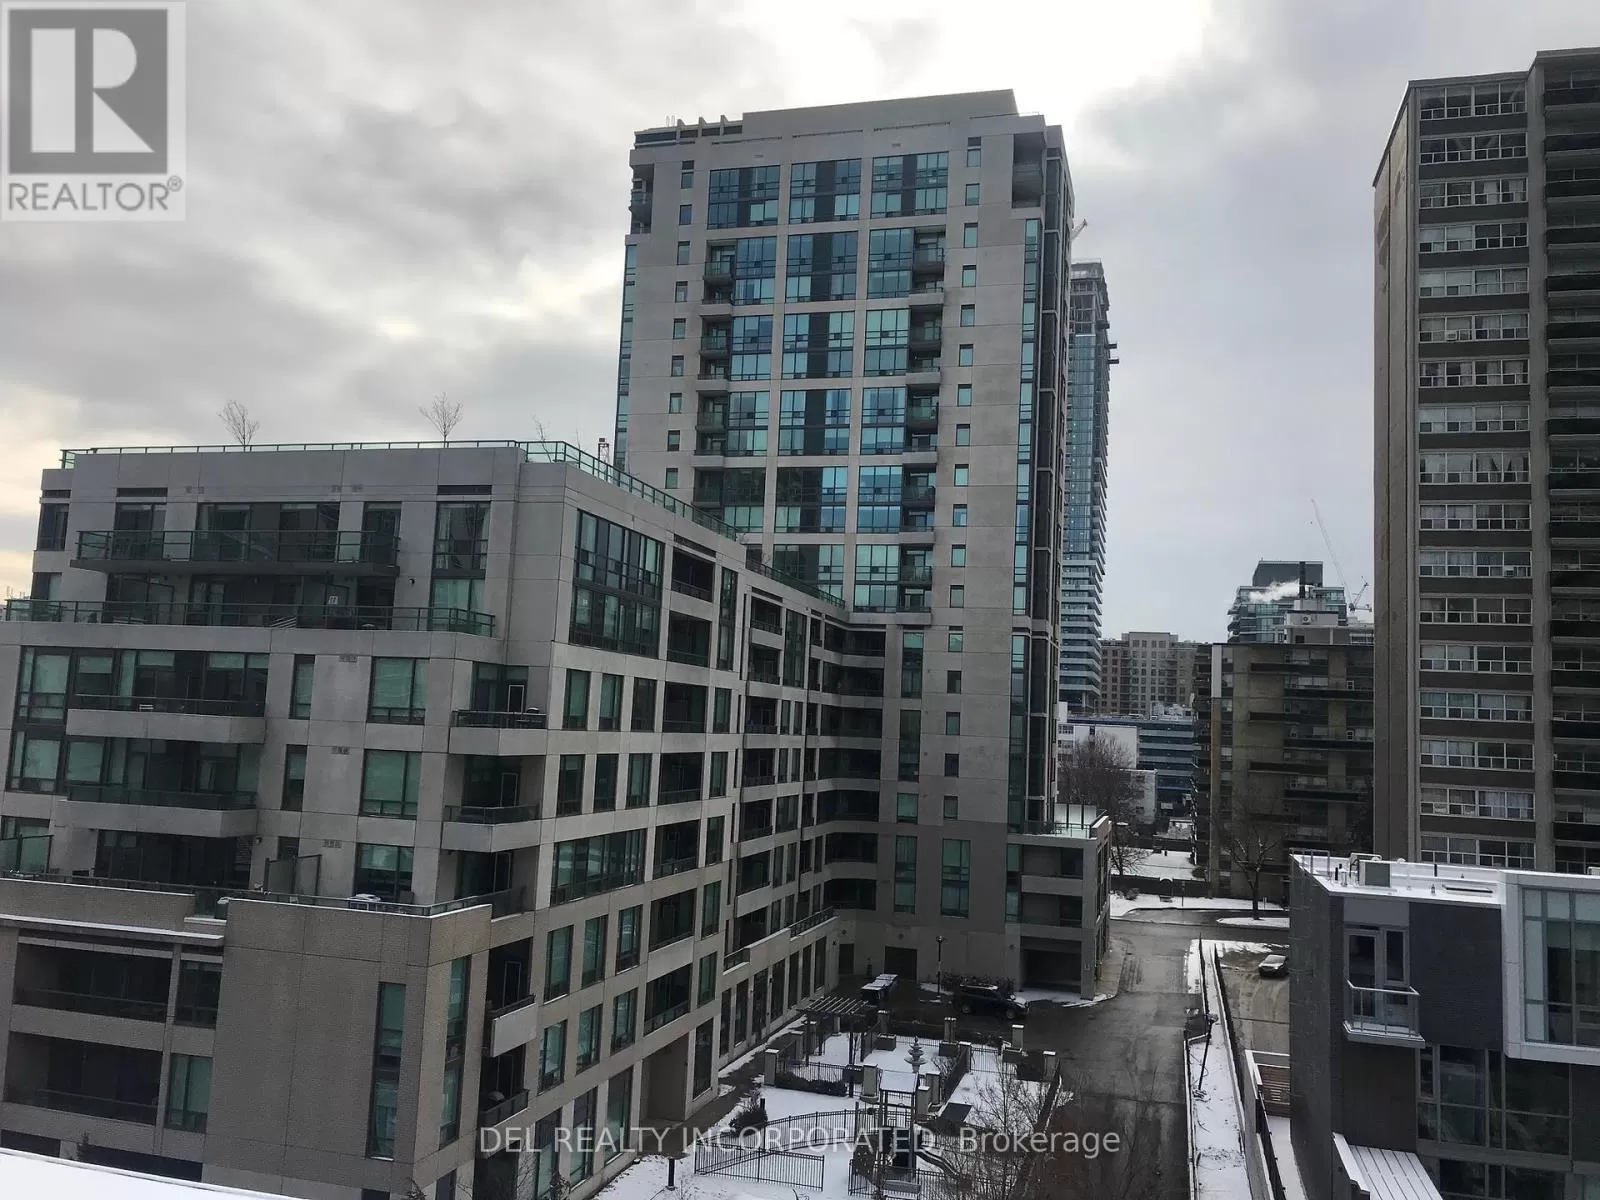 Apartment for rent: 522 - 101 Erskine Avenue, Toronto, Ontario M4P 1Y5